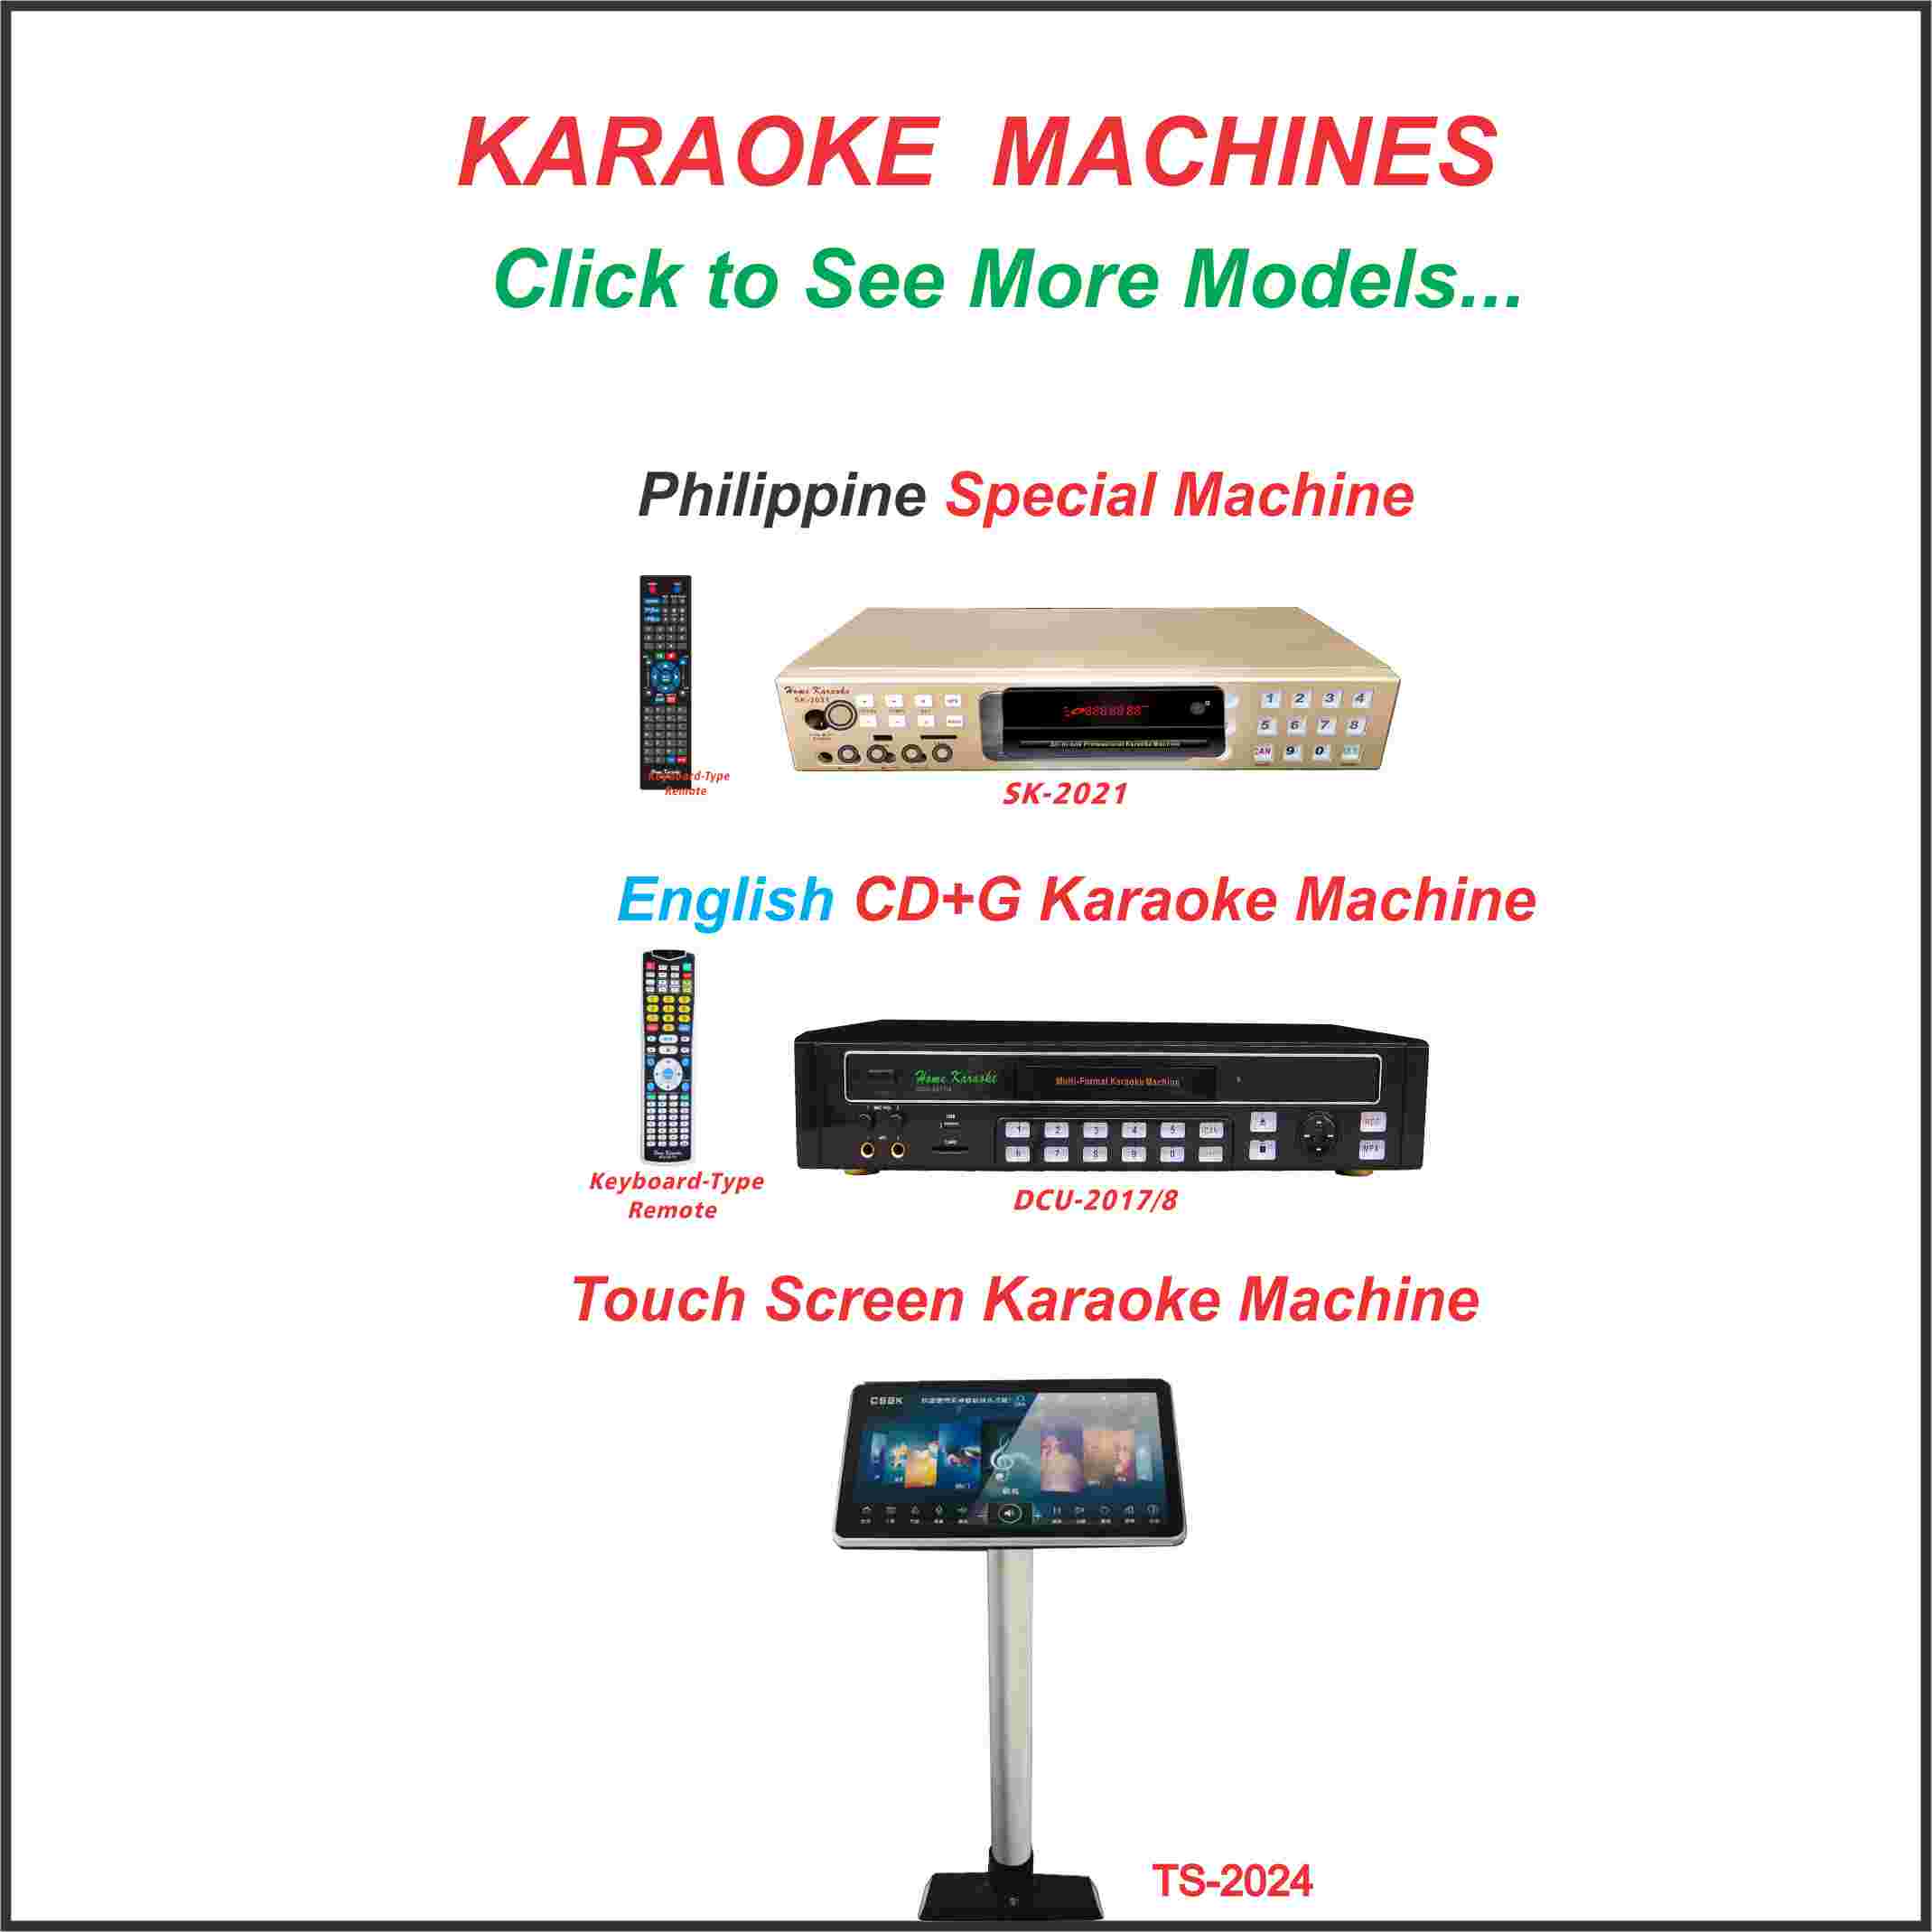 1. Karaoke Machine